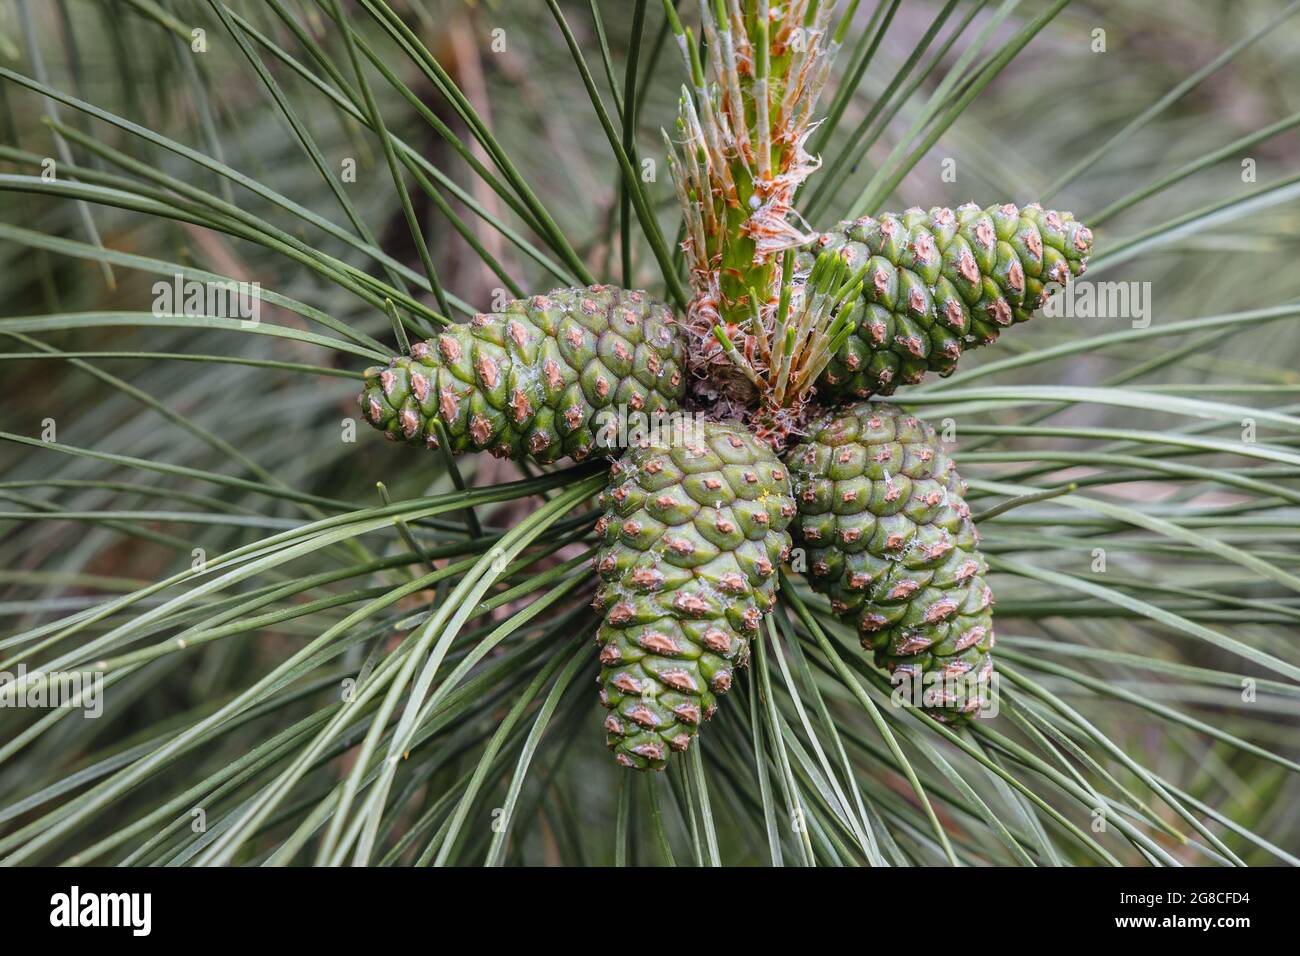 Austrian pine - black pine tree Stock Photo